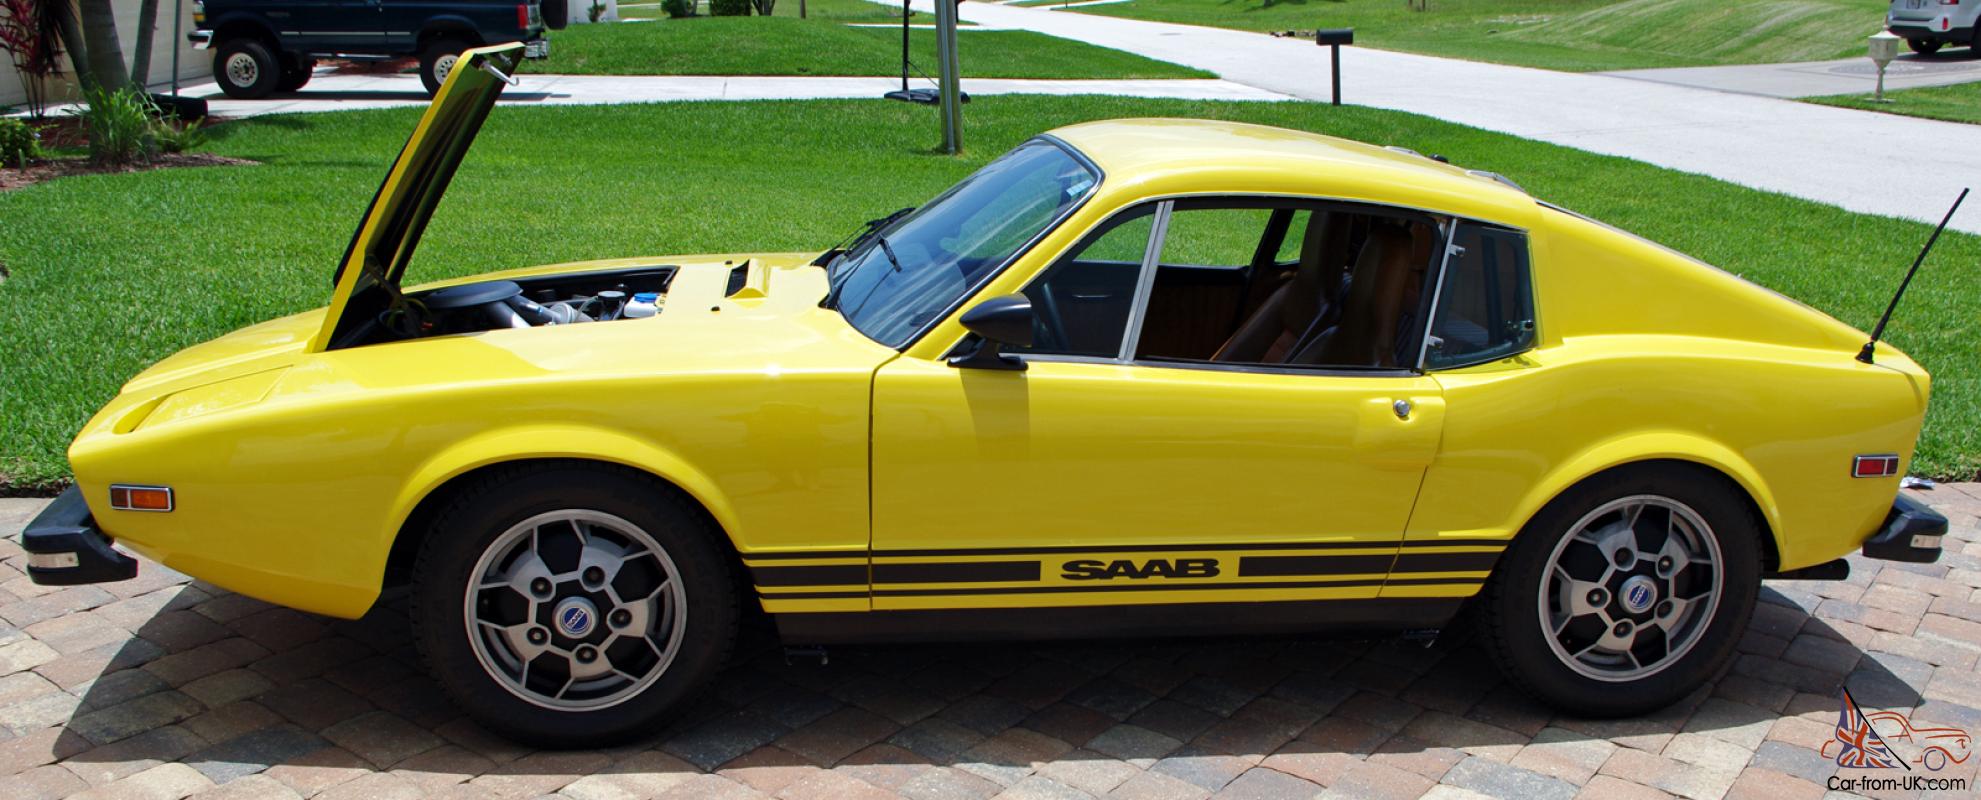 1974 Saab Sonett III Vintage Classic Sports Car for sale